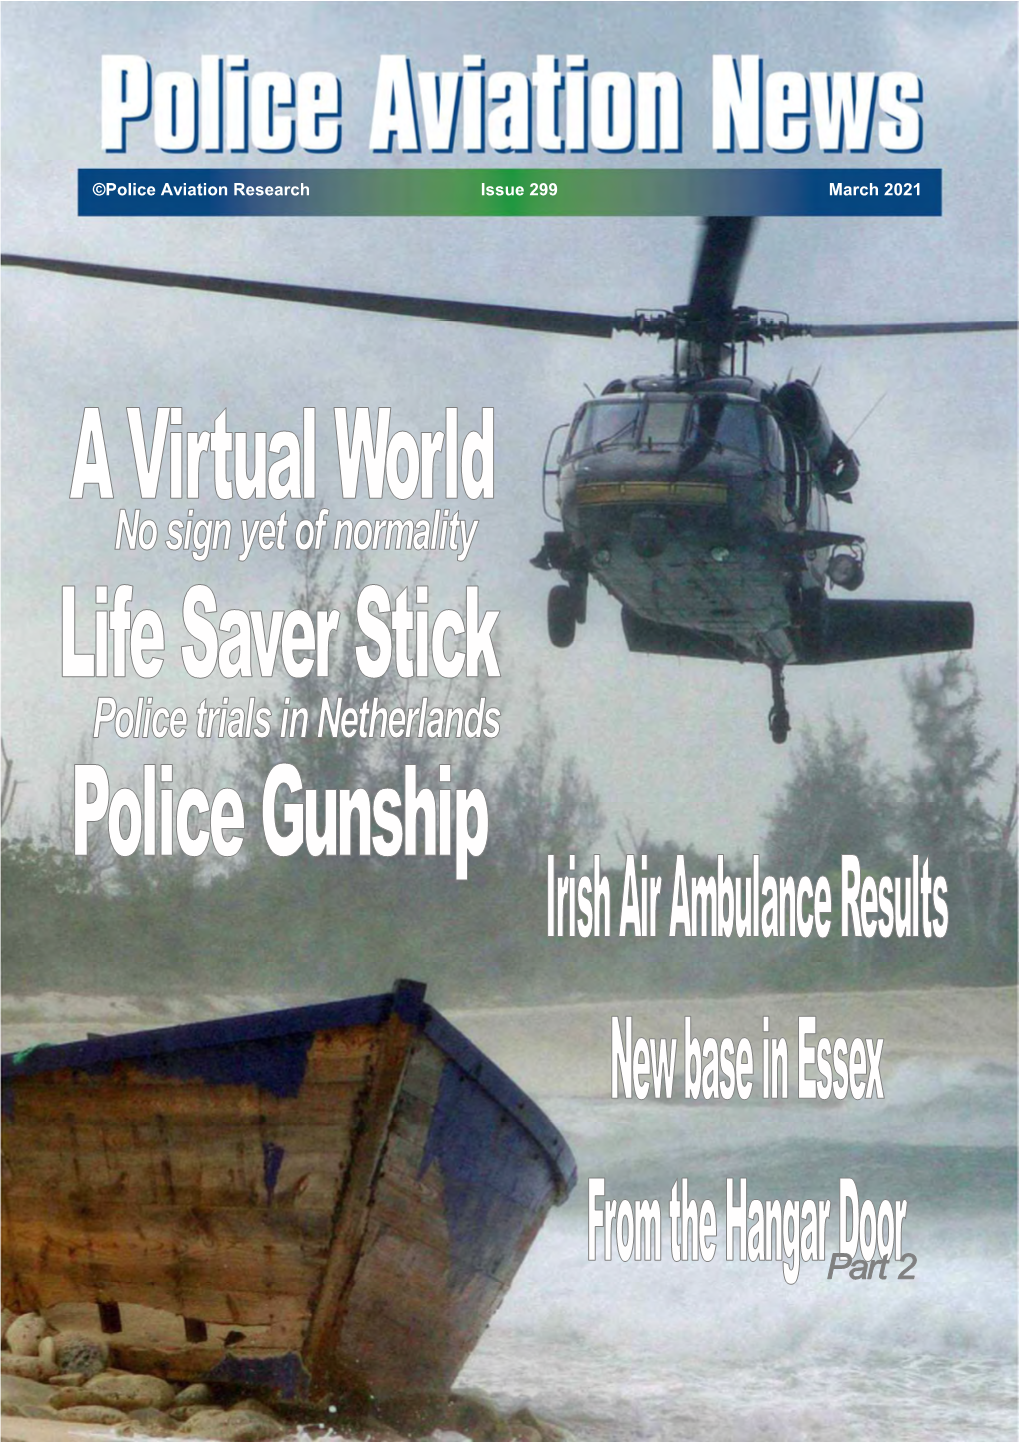 Police Aviation News 299 March 2021 1 # ©Police Aviation Research Issue 299 March2021 ©Police Aviation Research Issue 299 Ma